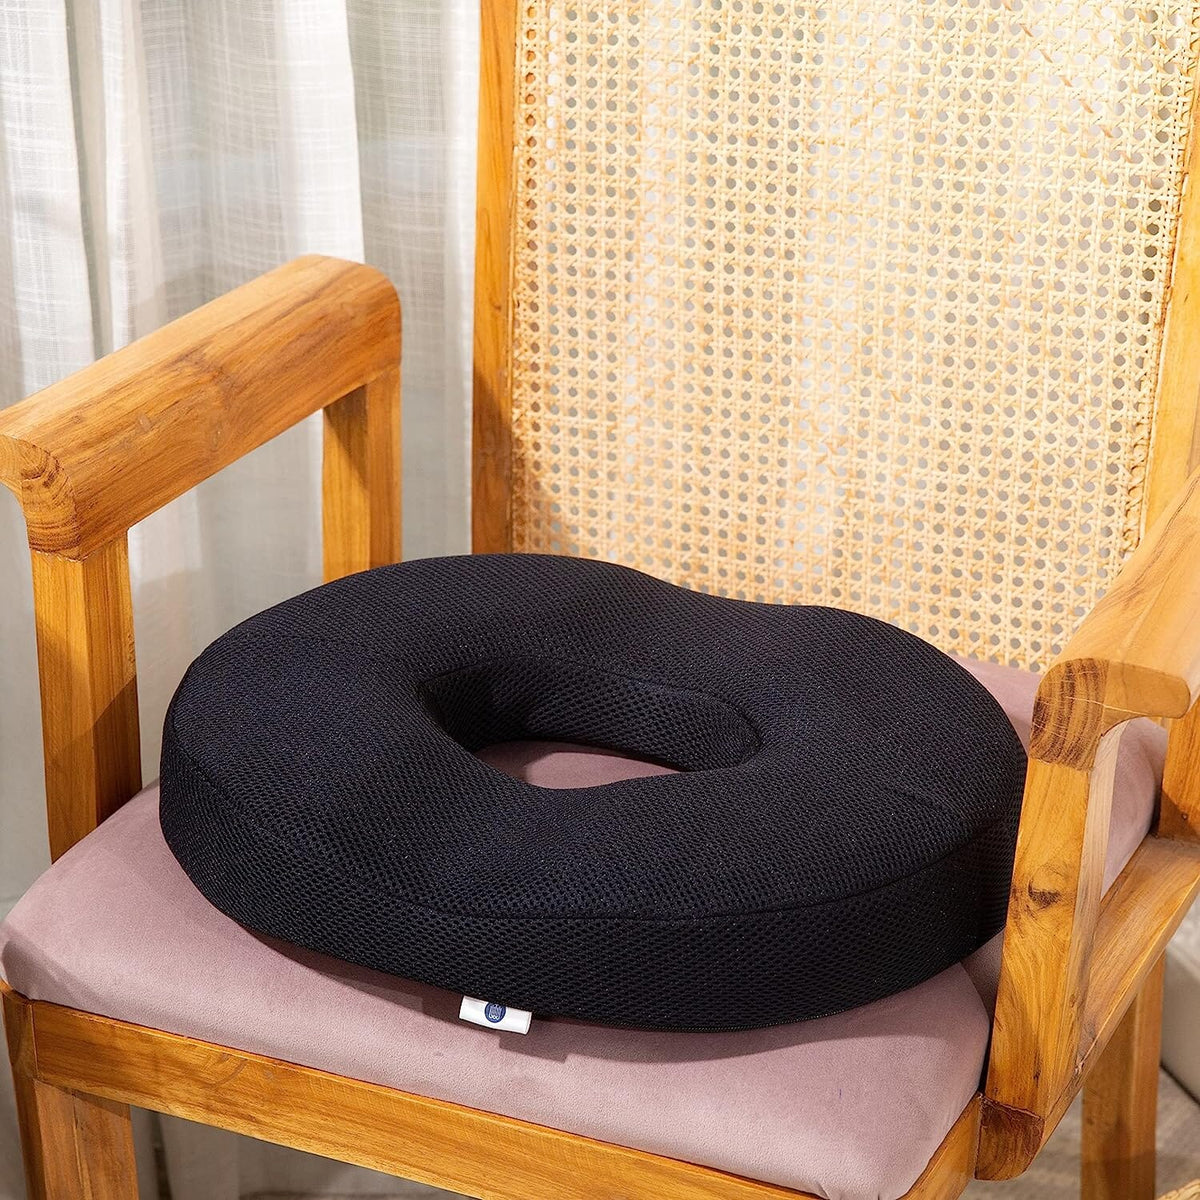 Coccyx Cushions for Tailbone Pain: Donut Cushions Versus Wedge